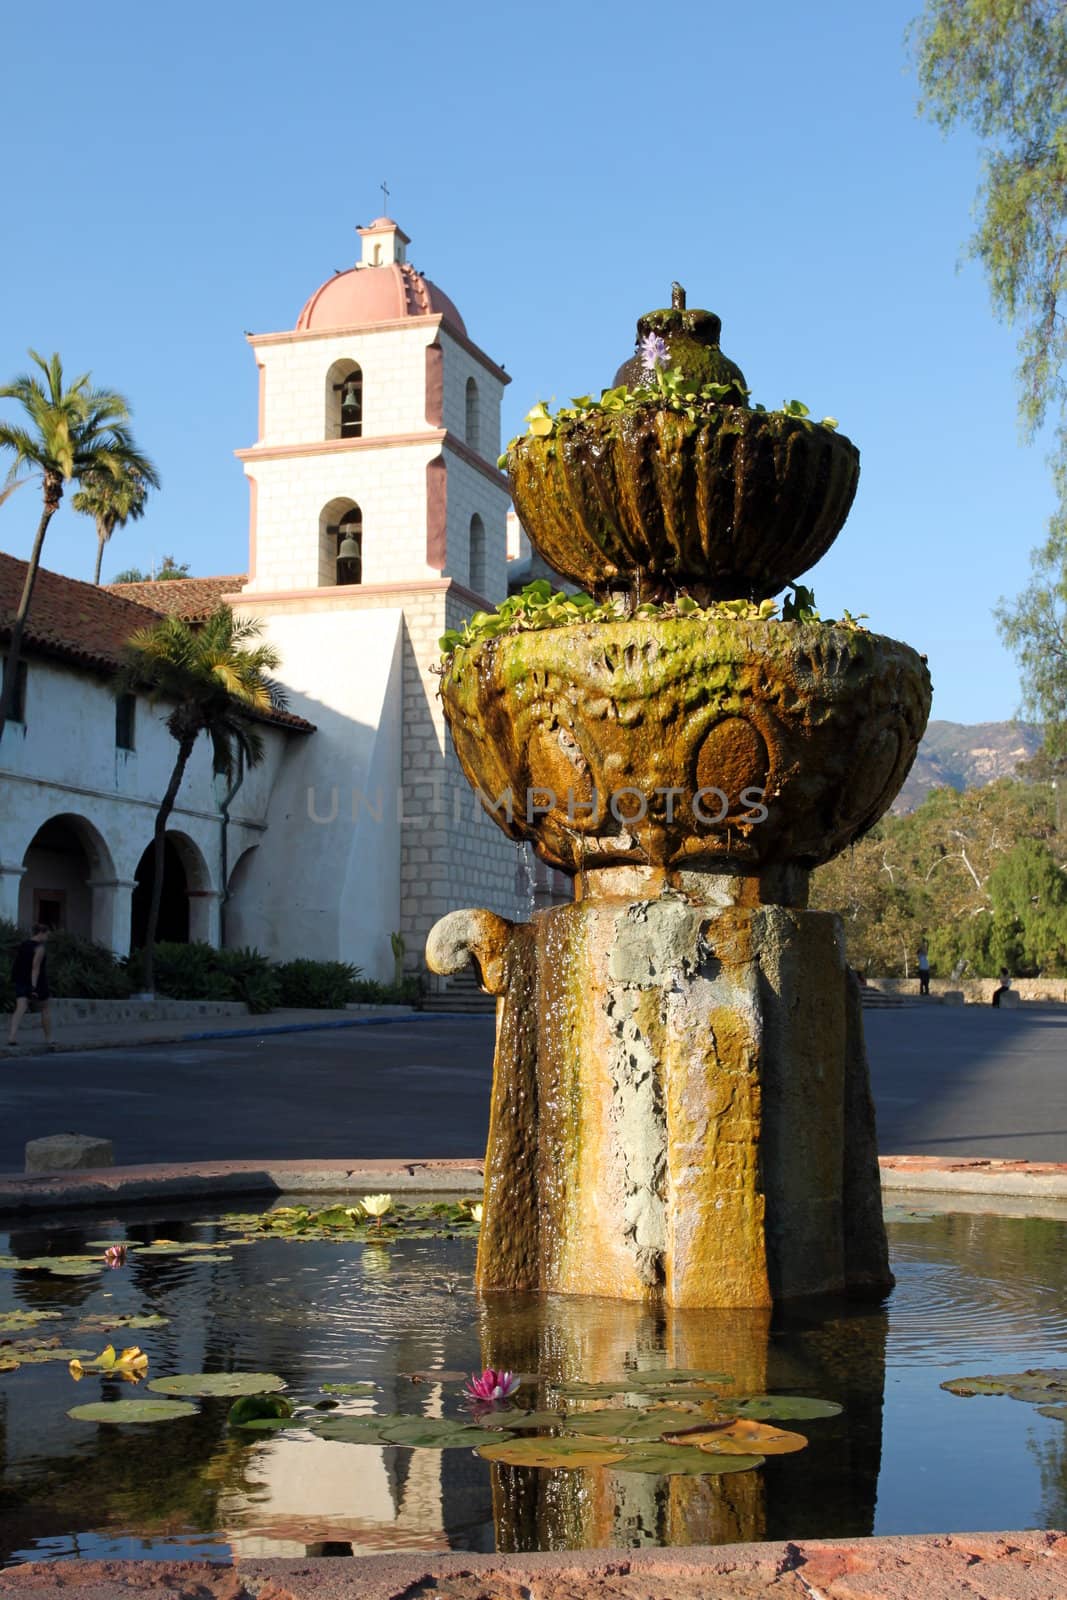 The Historic Mission Santa Barbara in California USA